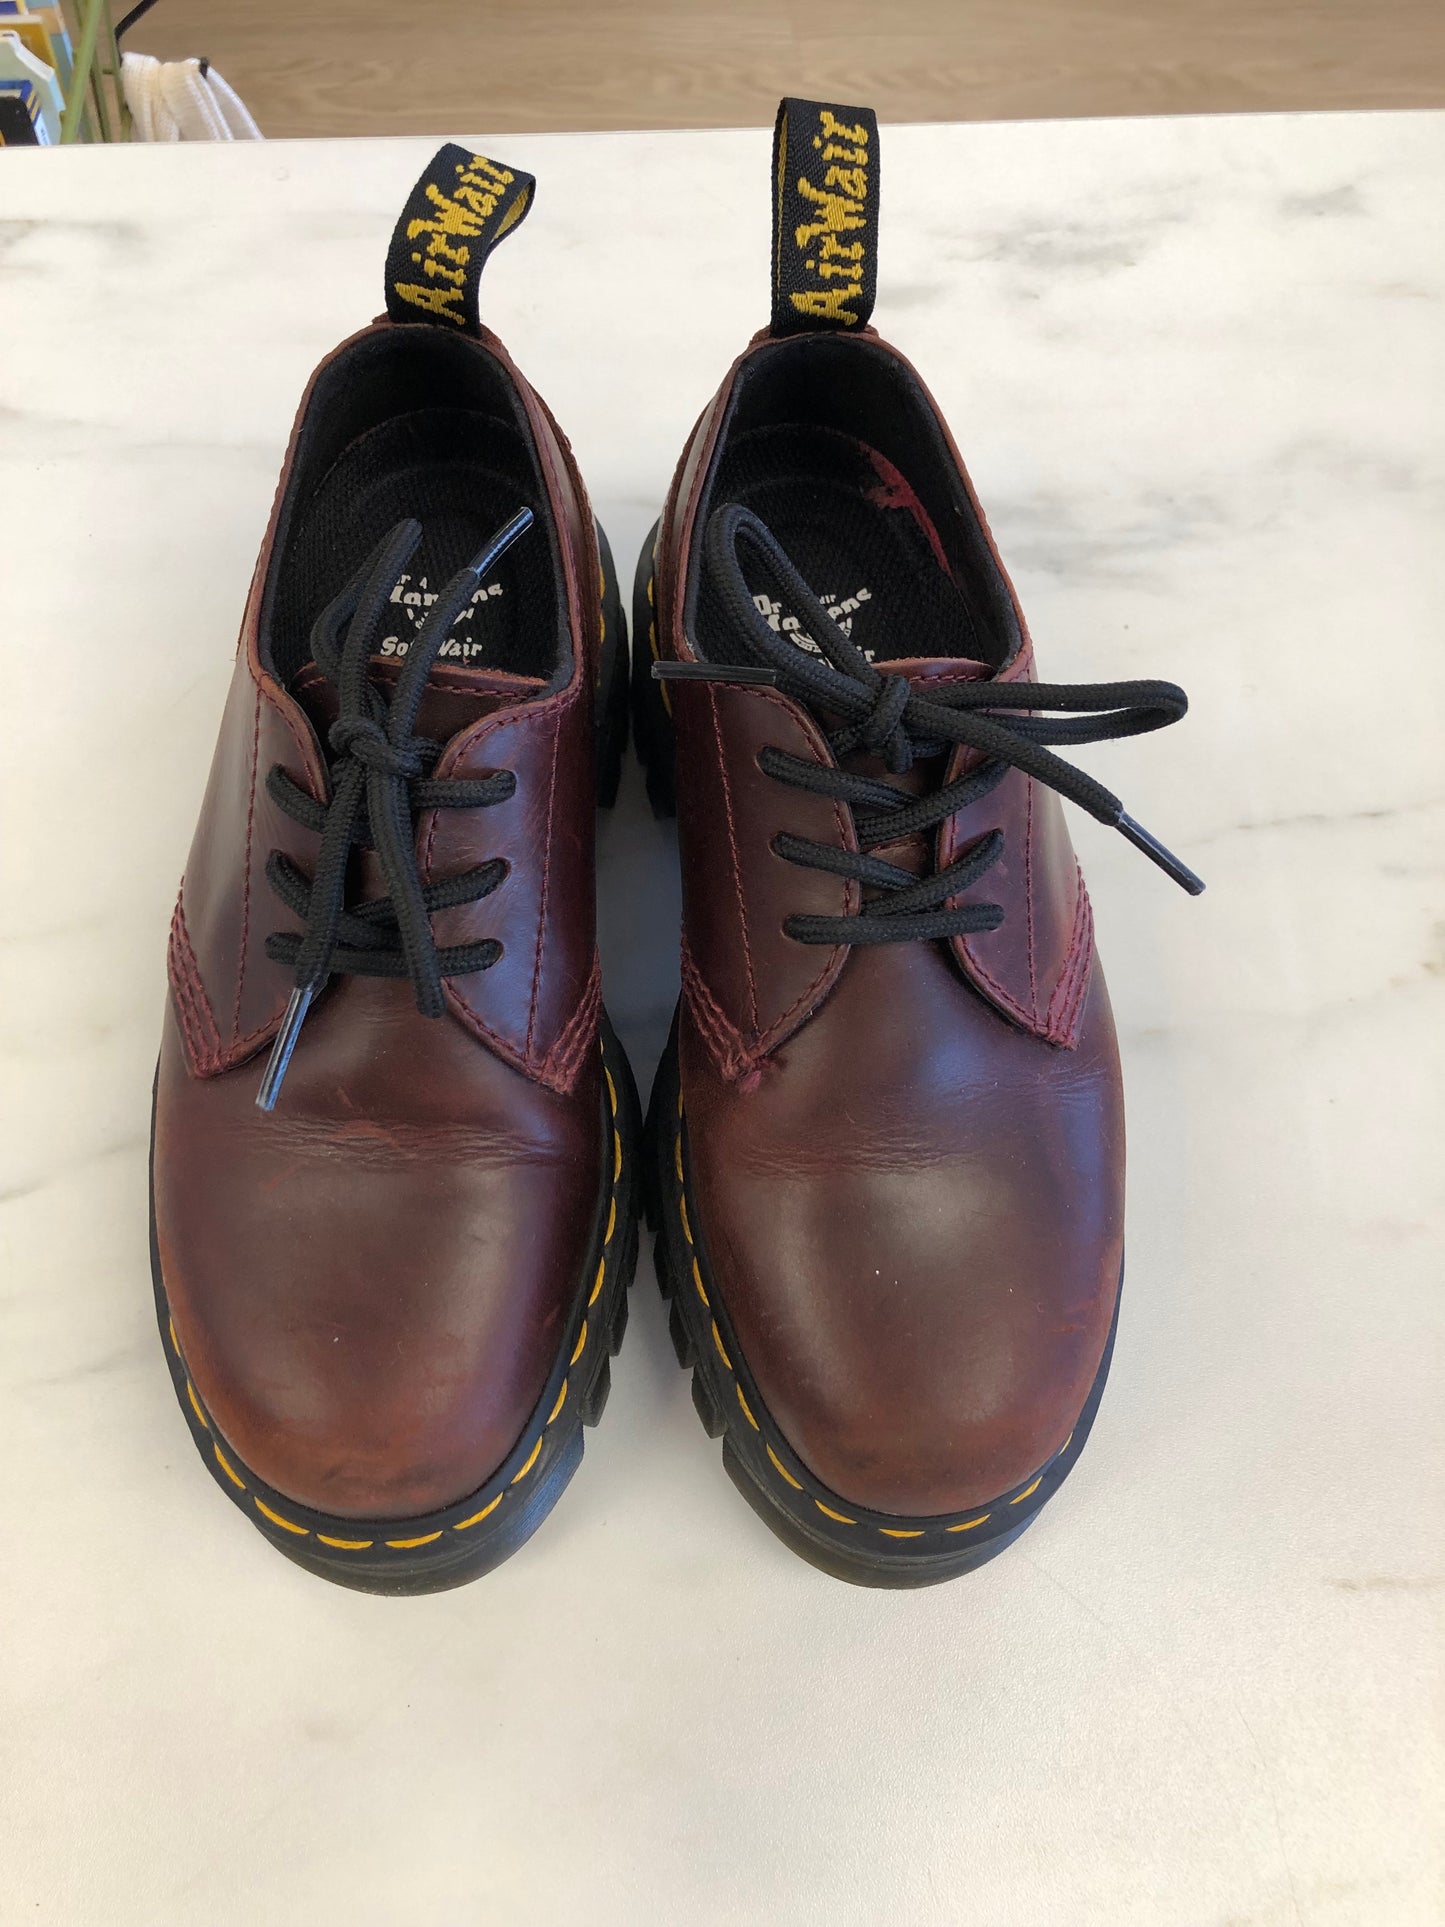 Dr Martens Adult Size 5 Burgundy Shoes/Boots